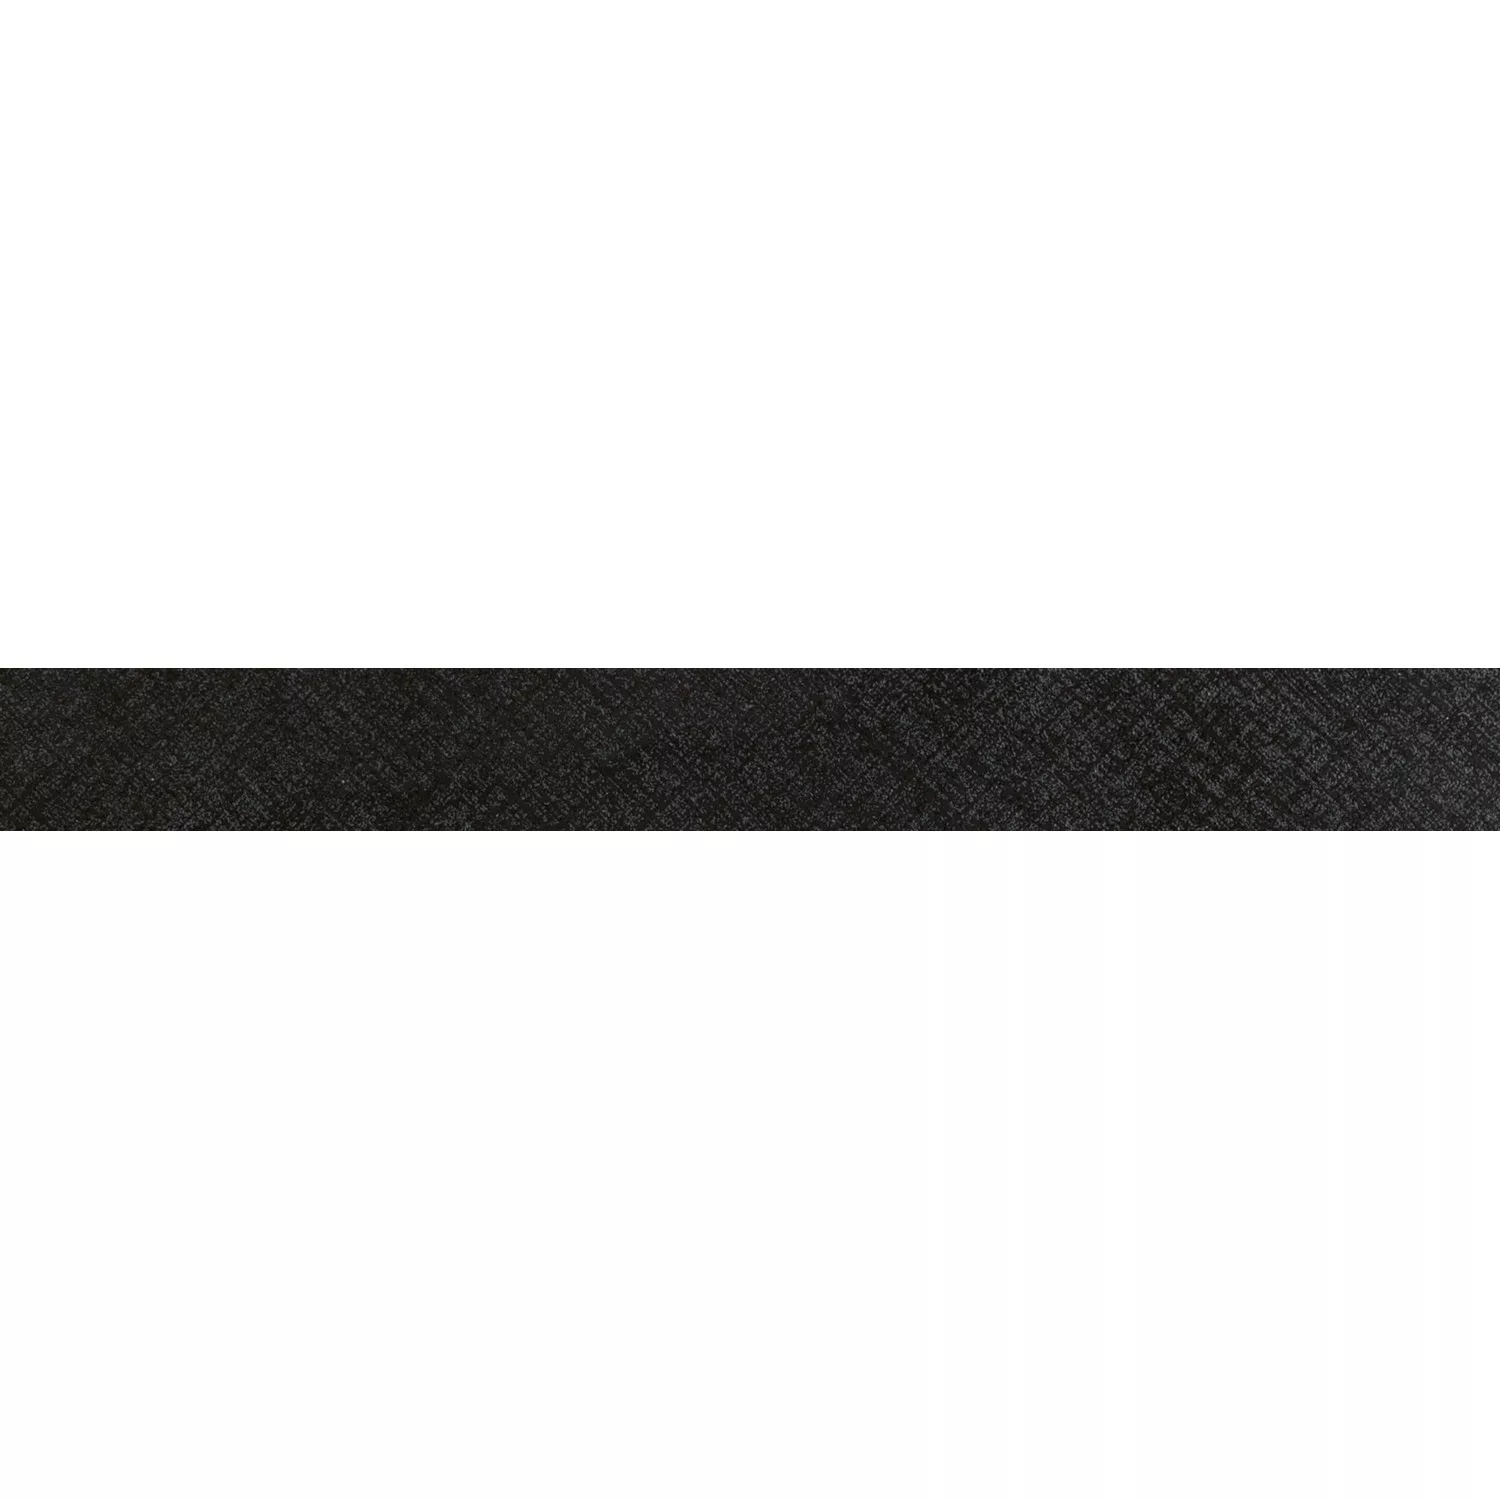 Sockel Las Vegas Schwarz 6,5 cm x 60 cm günstig online kaufen